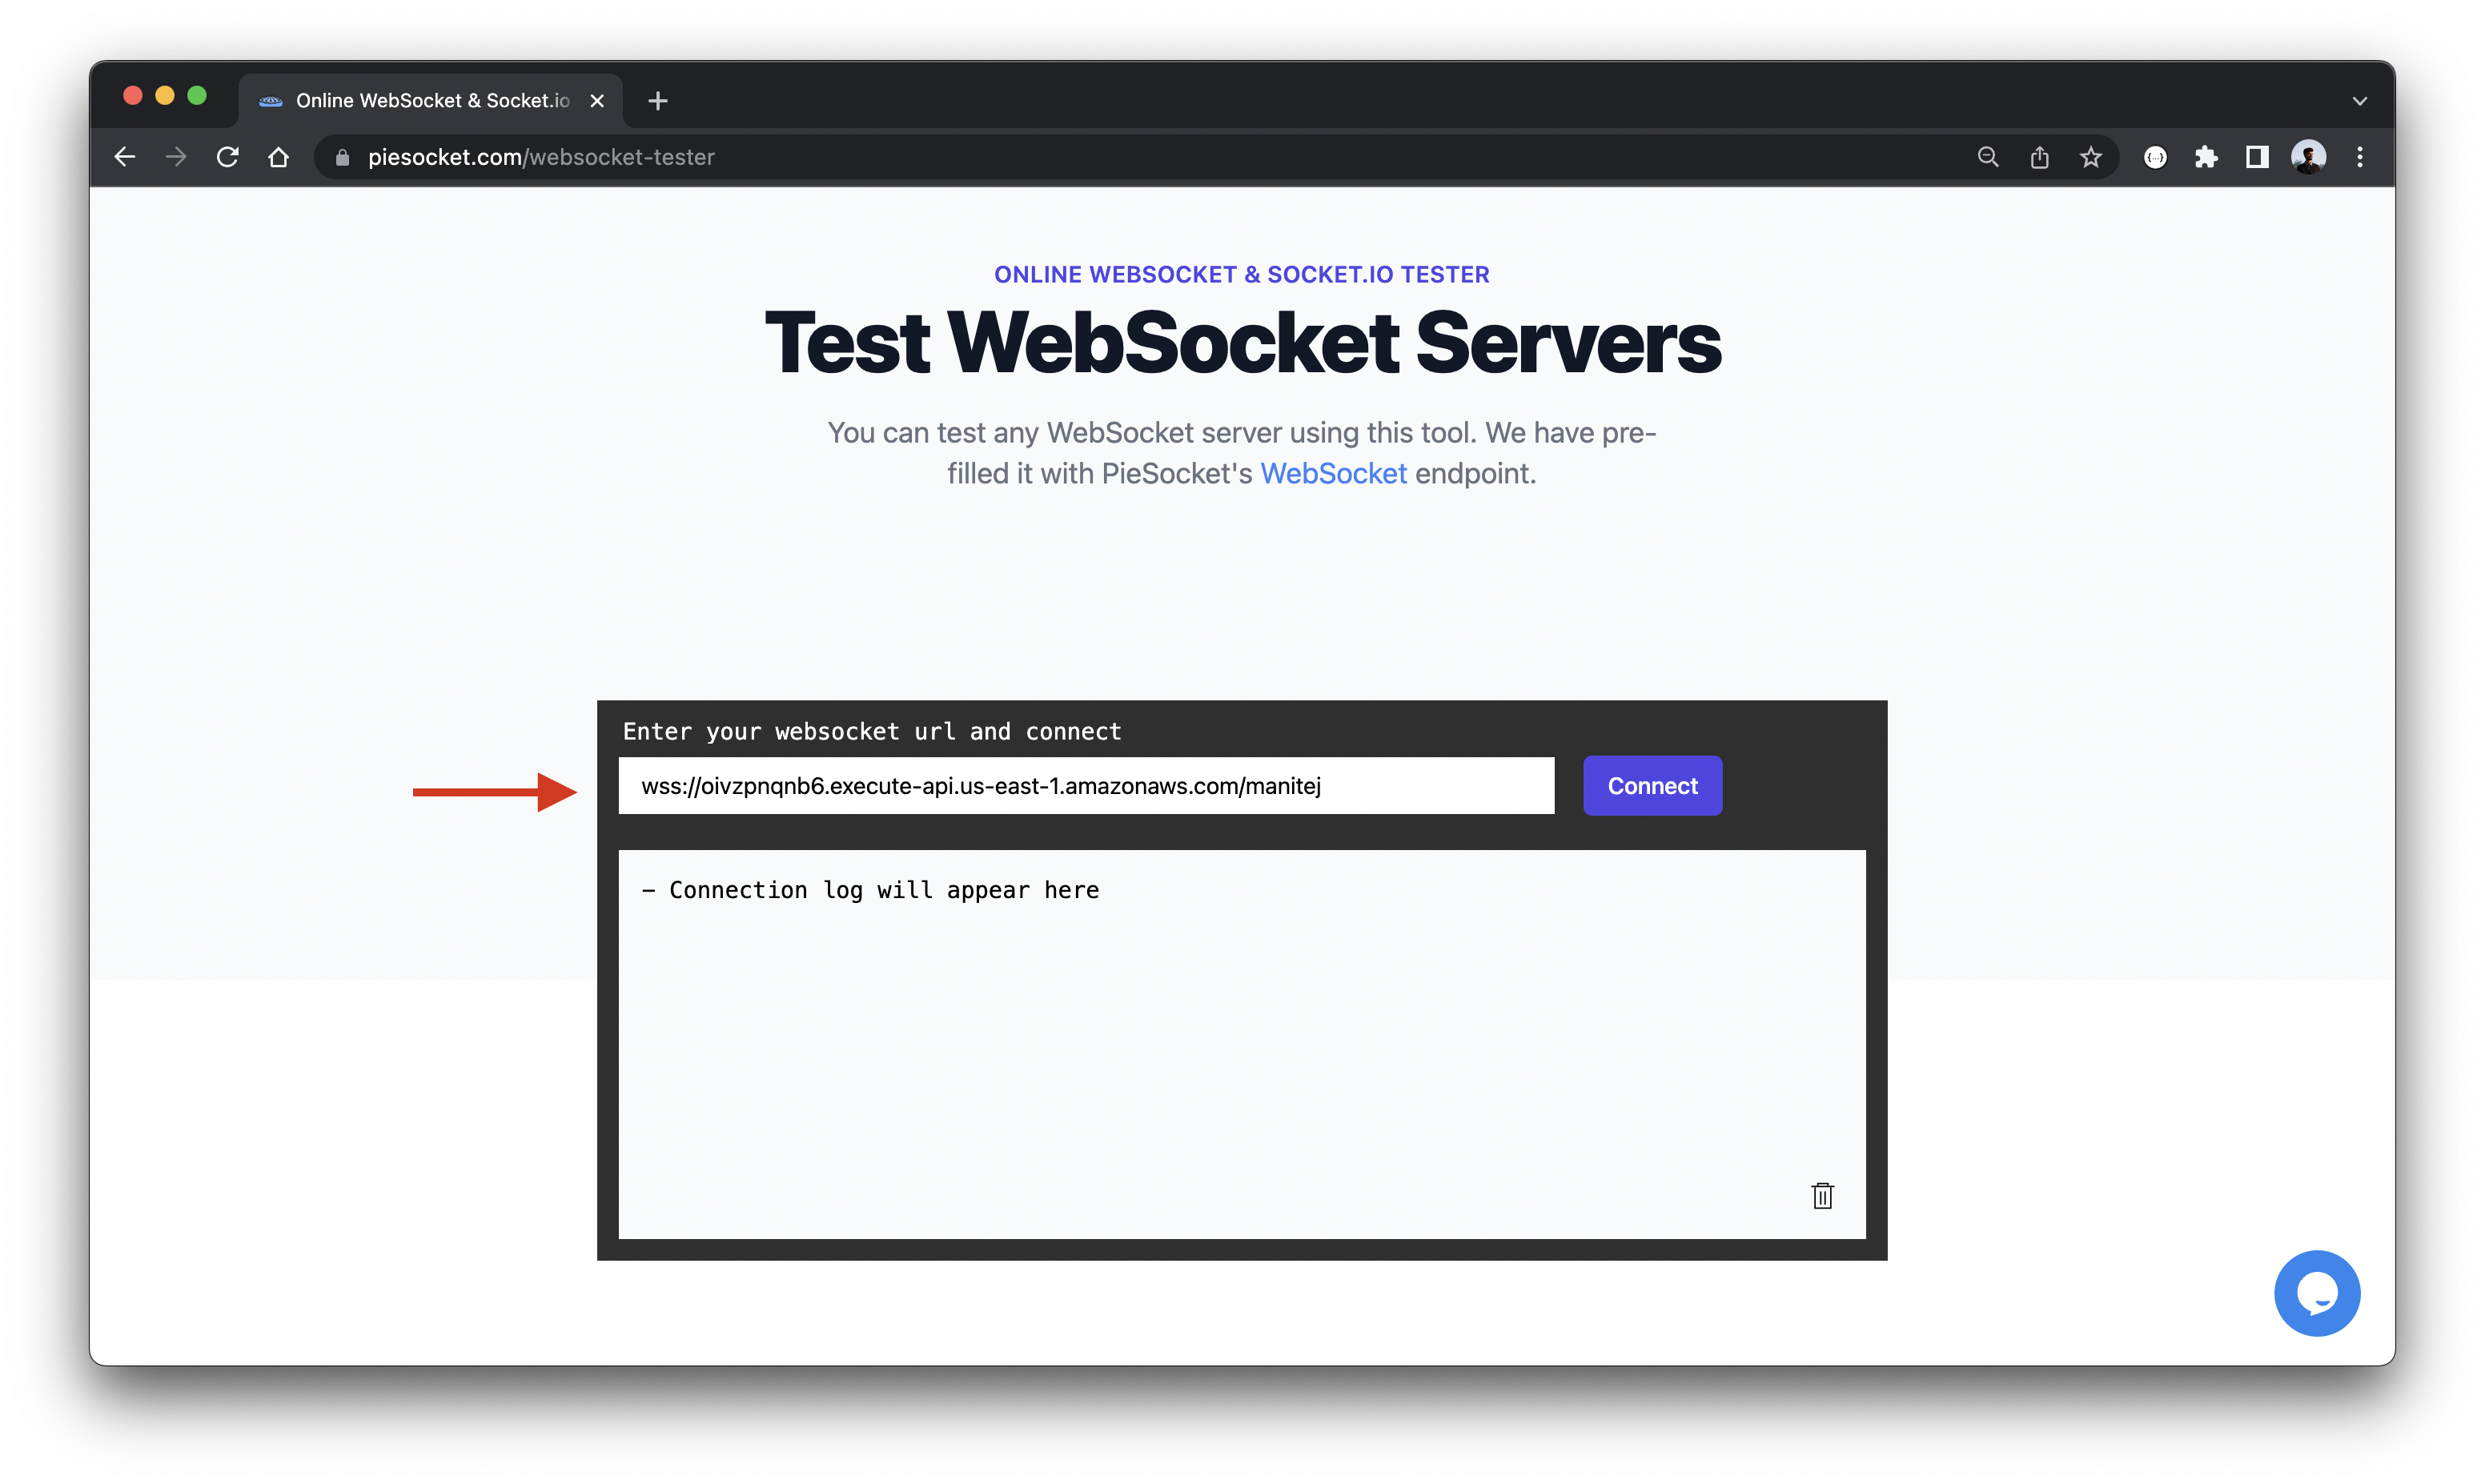 Connect to serverless WebSocket API